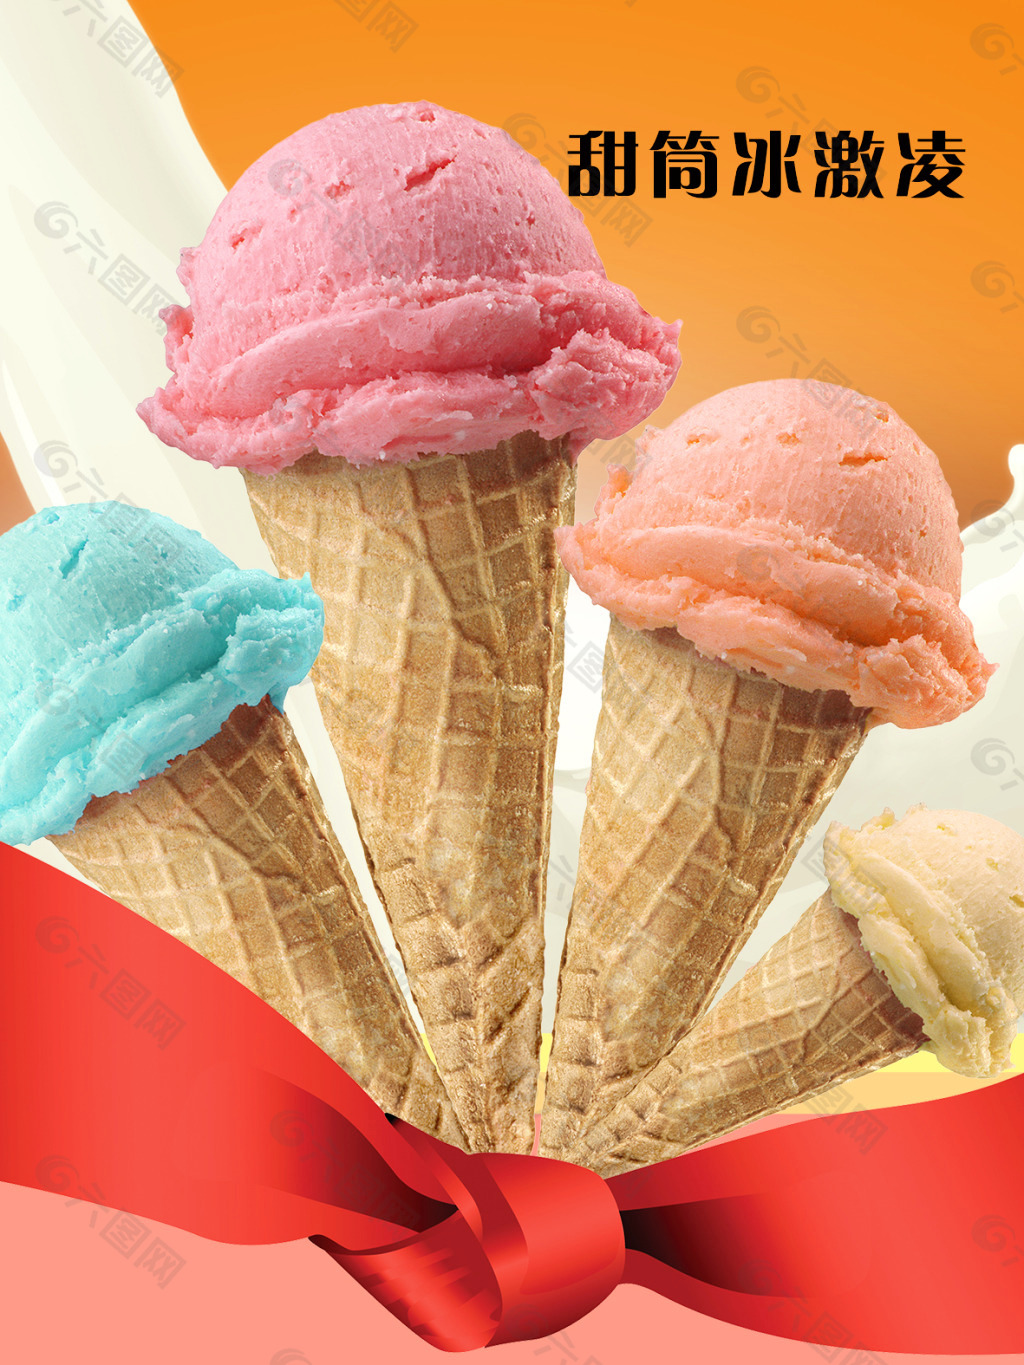 DQ冰淇淋图片素材-编号05073798-图行天下